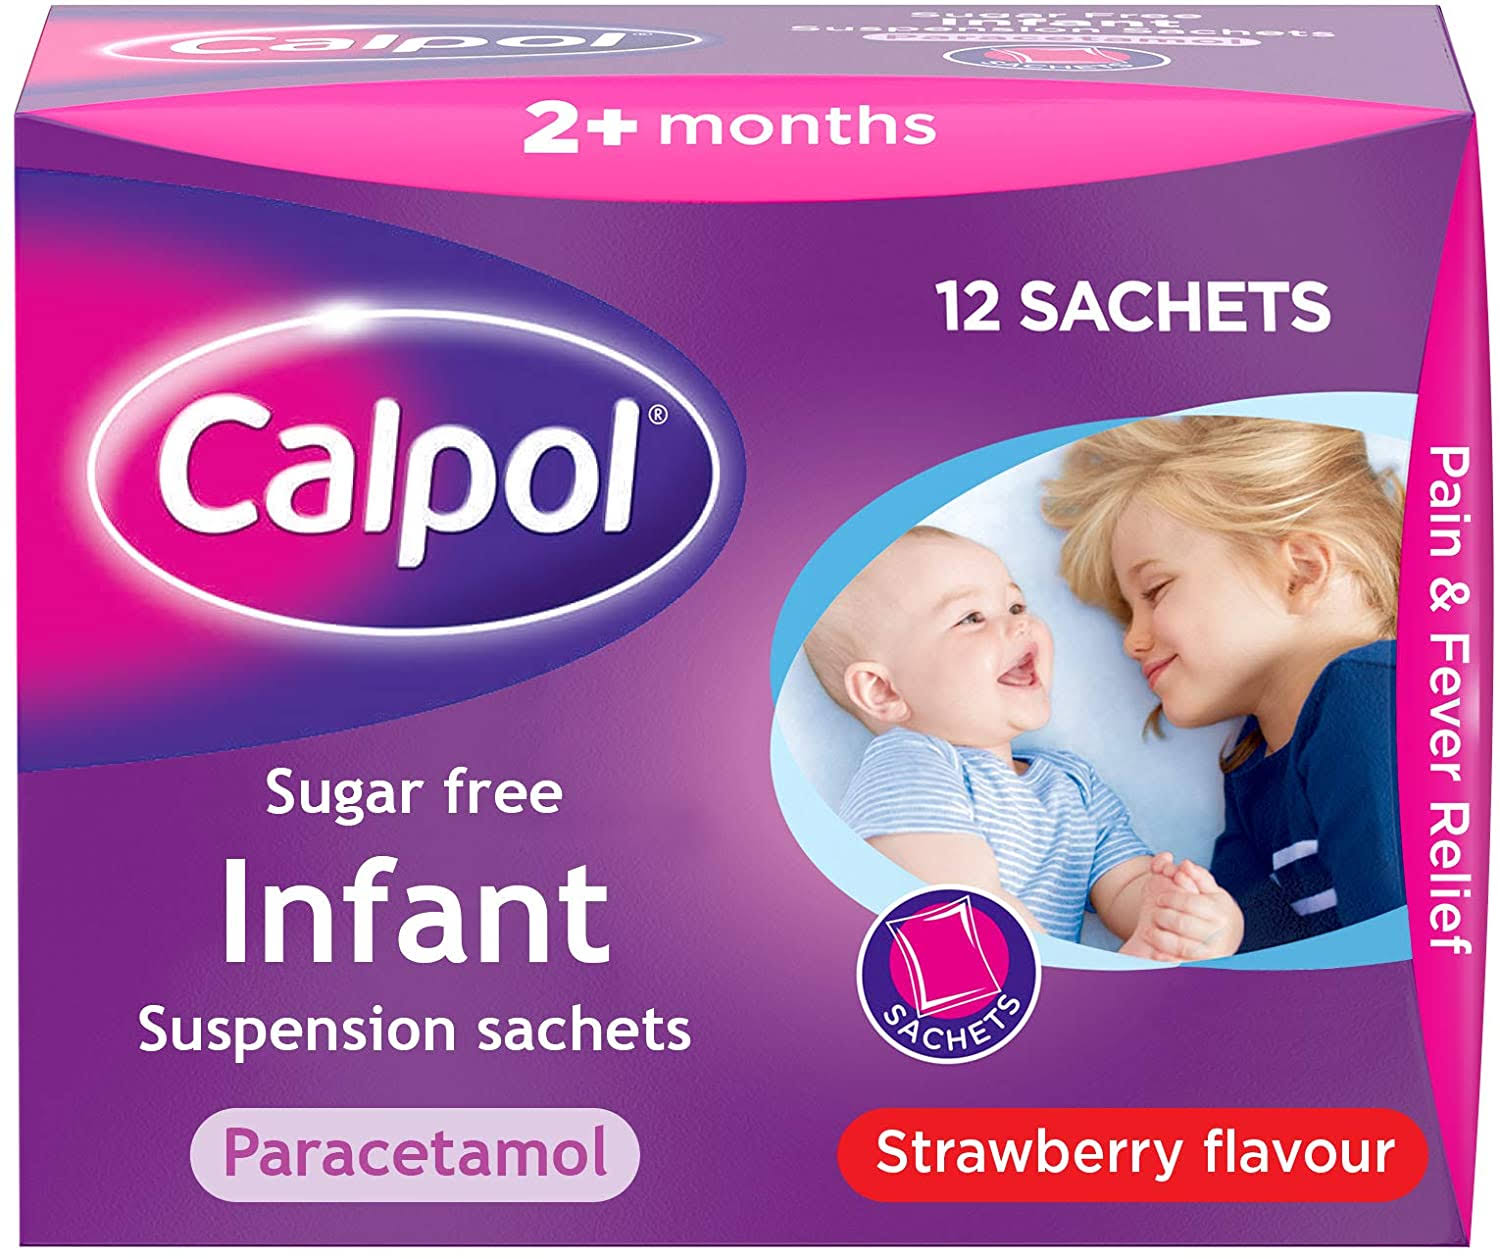 Calpol Sugar Free Infant Suspension Sachets Strawberry Flavour 2+ Months